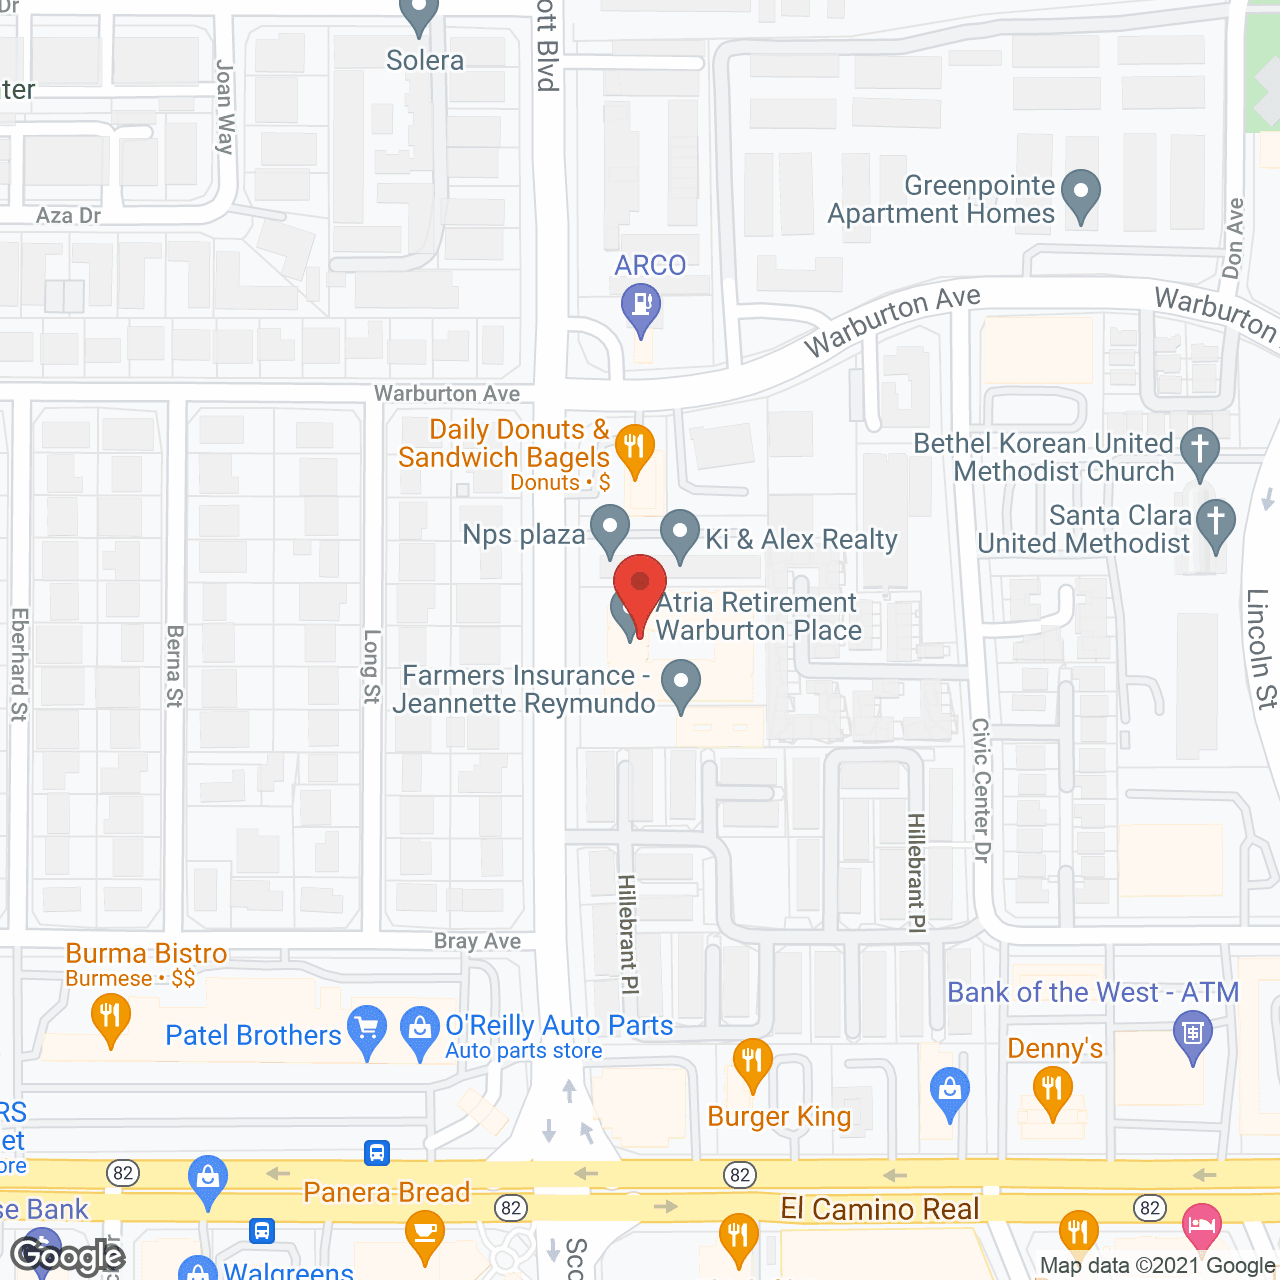 Essential Care - Santa Clara in google map